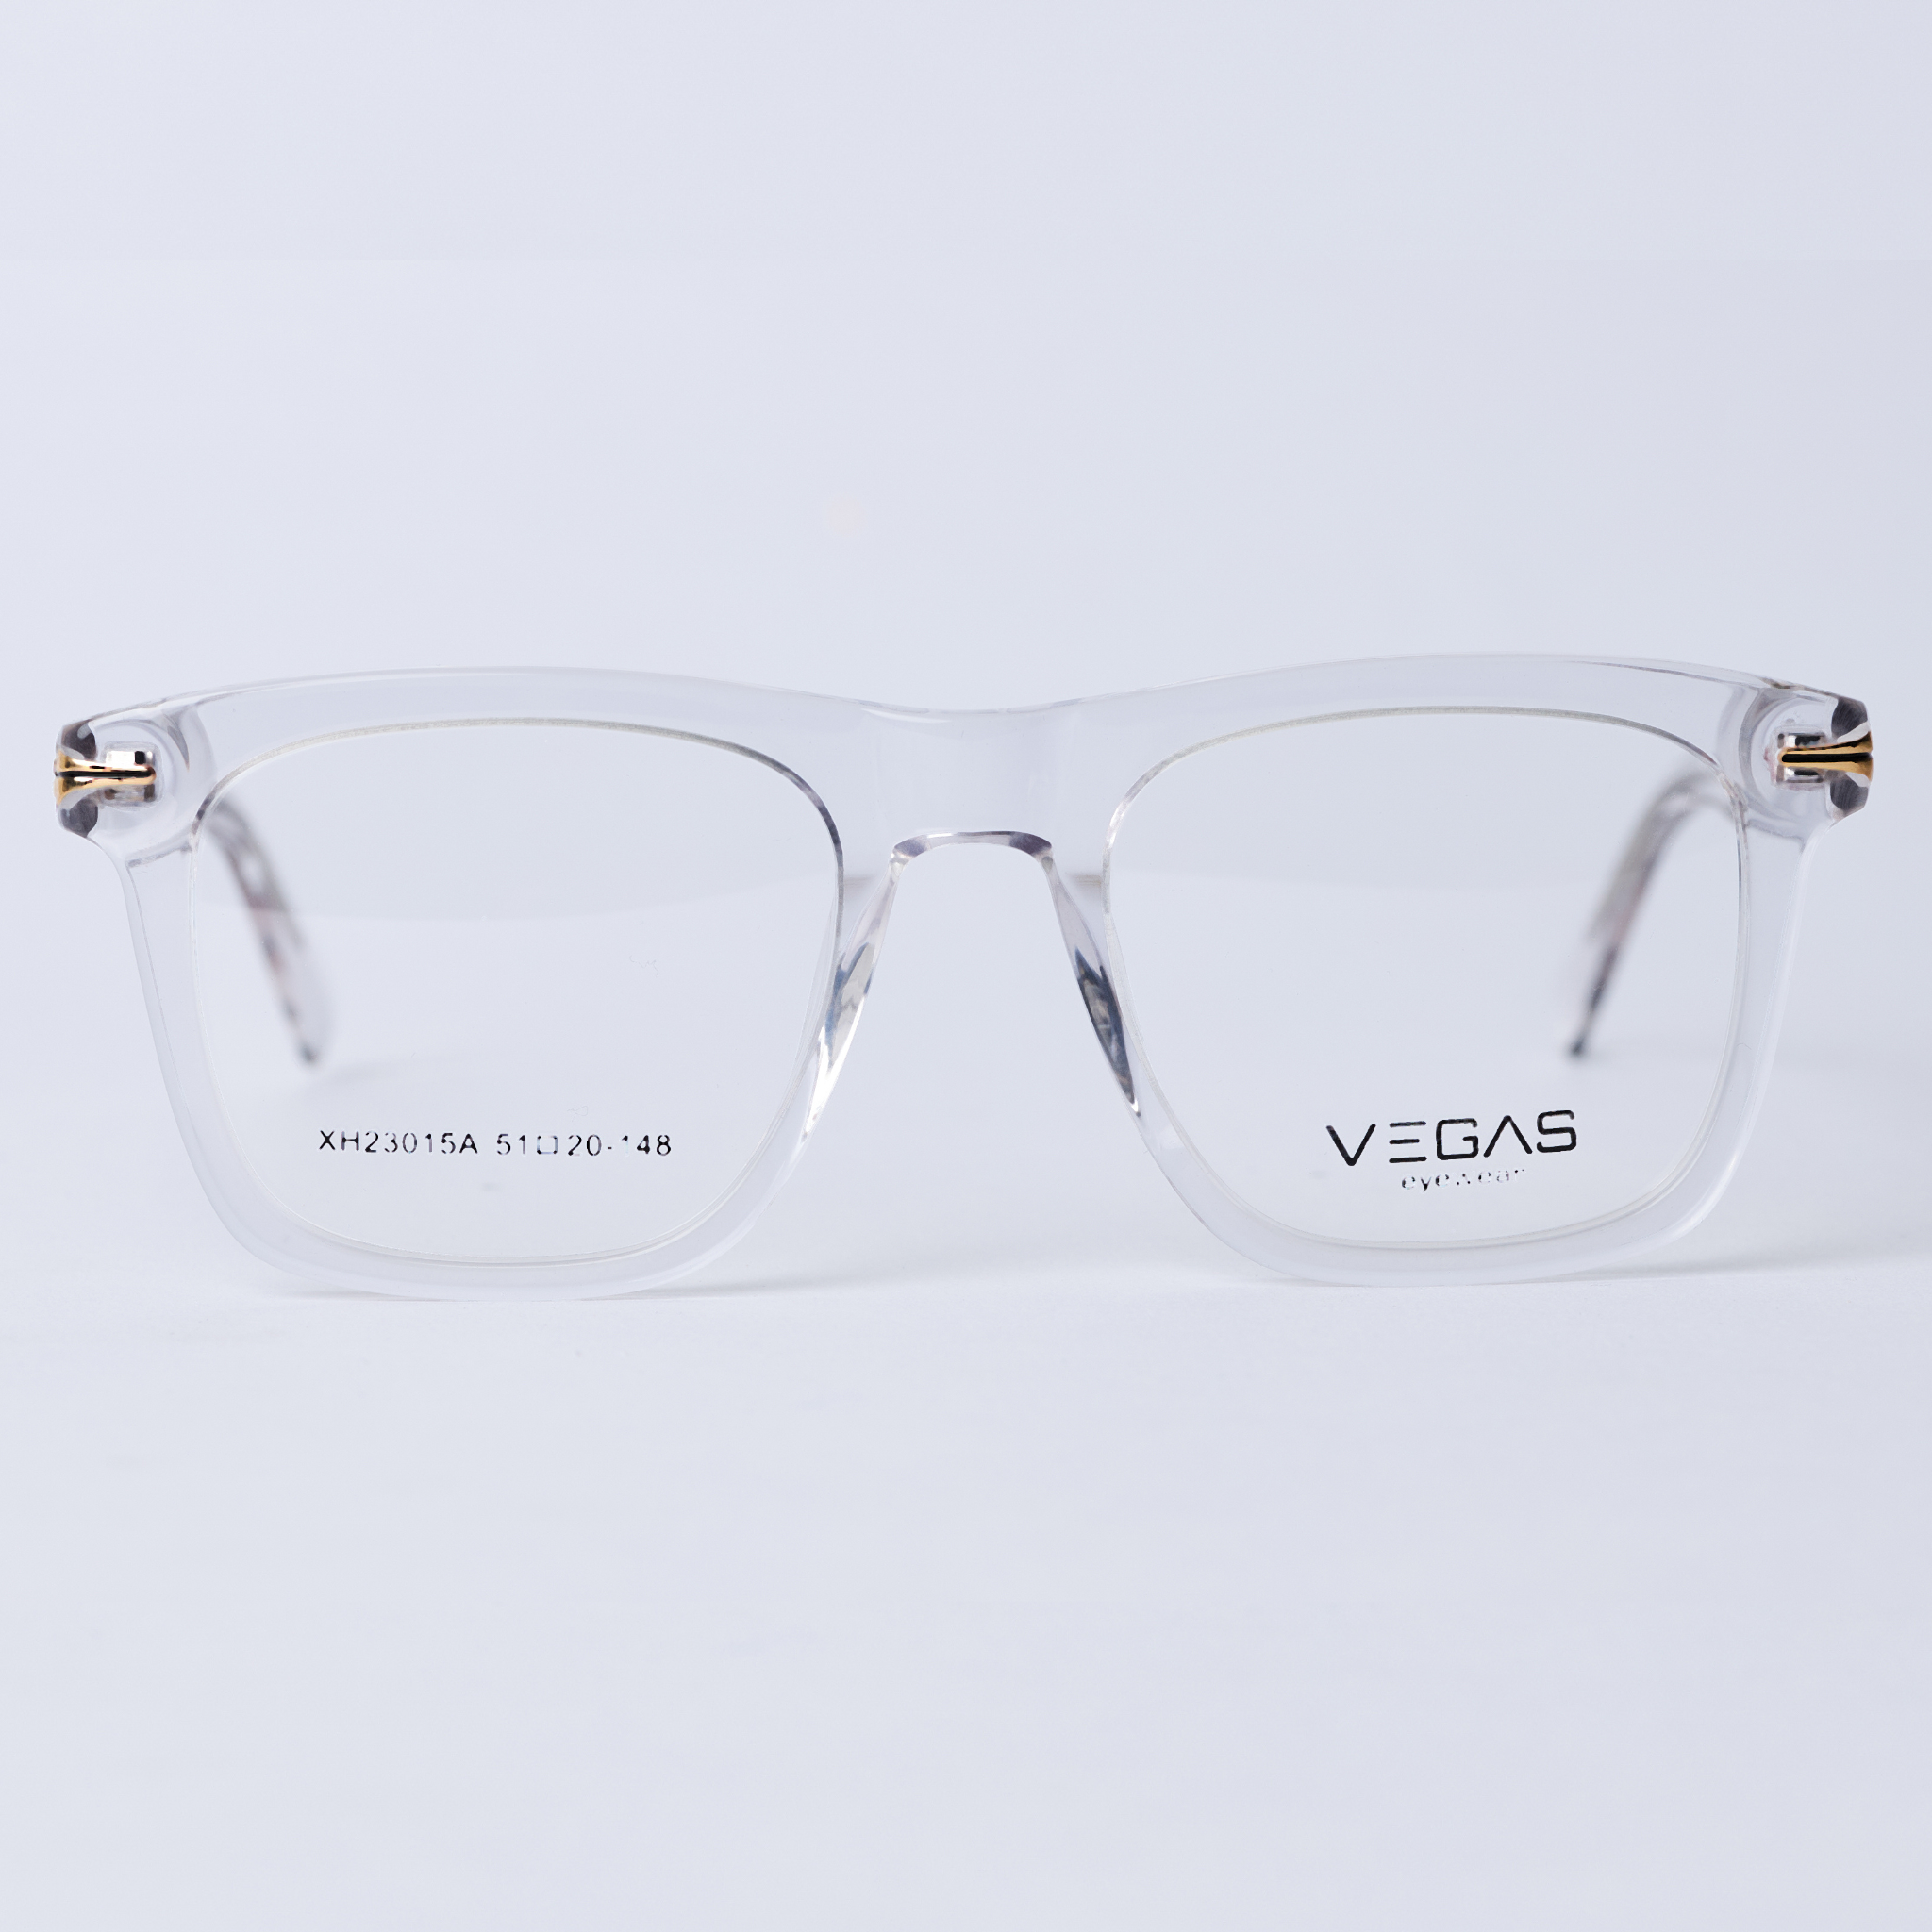 Eyeglasses| Vegas XH23015A